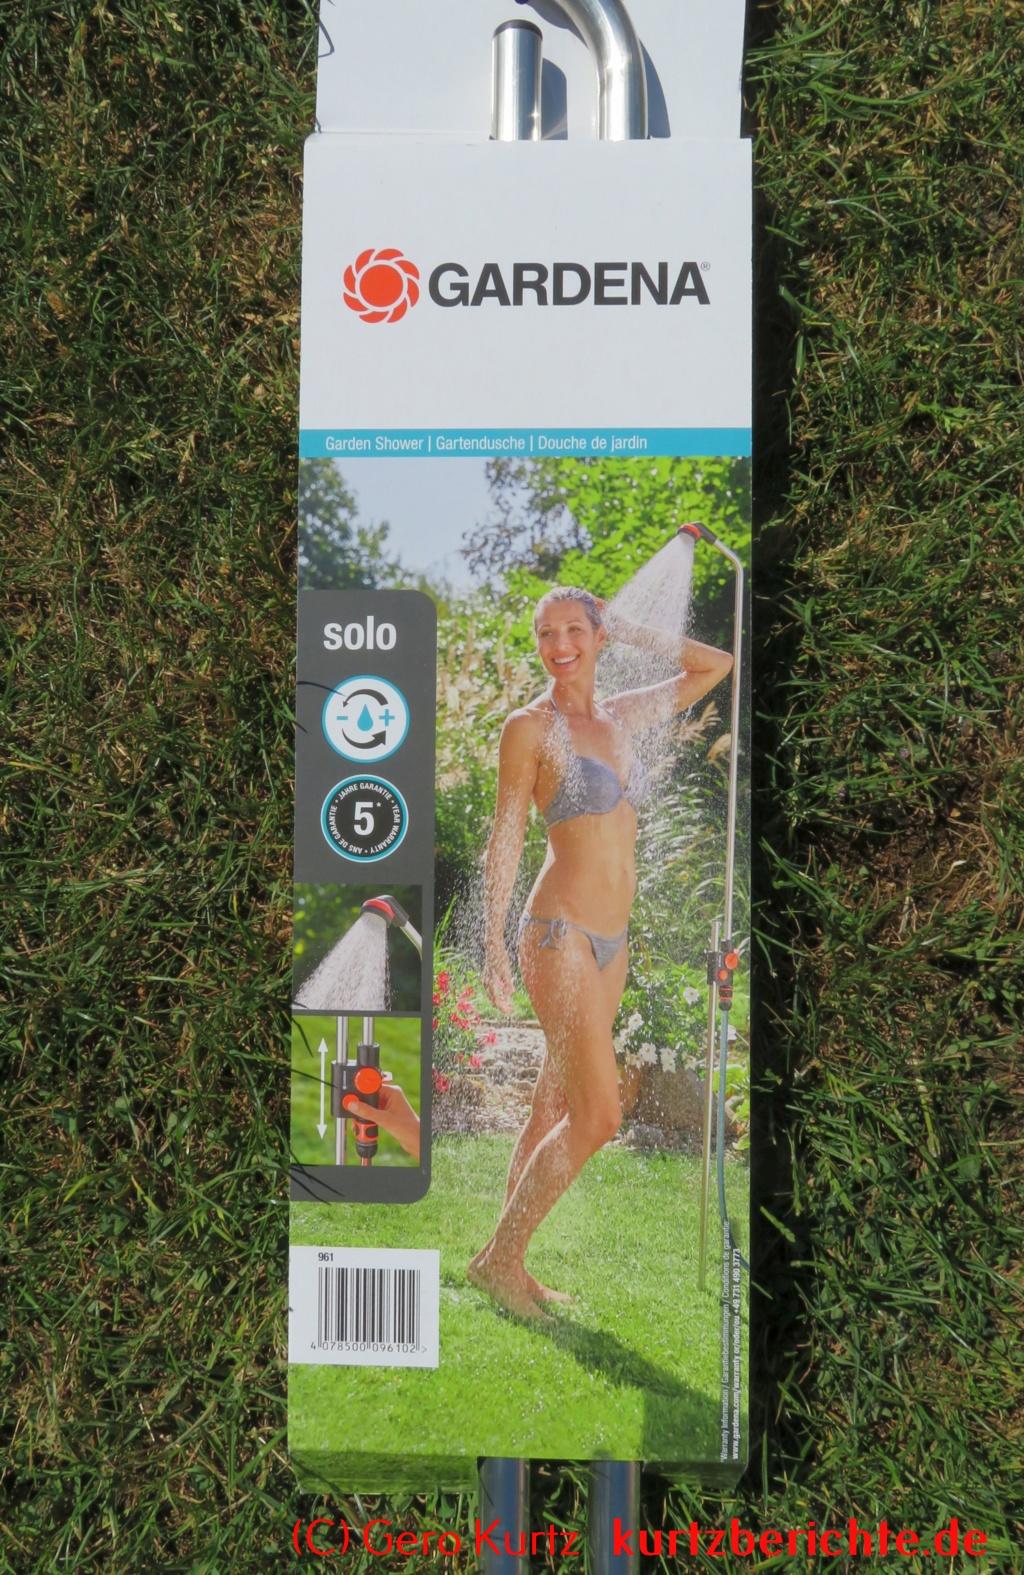 Gardena Gartendusche Solo - Verpackung mit Cover